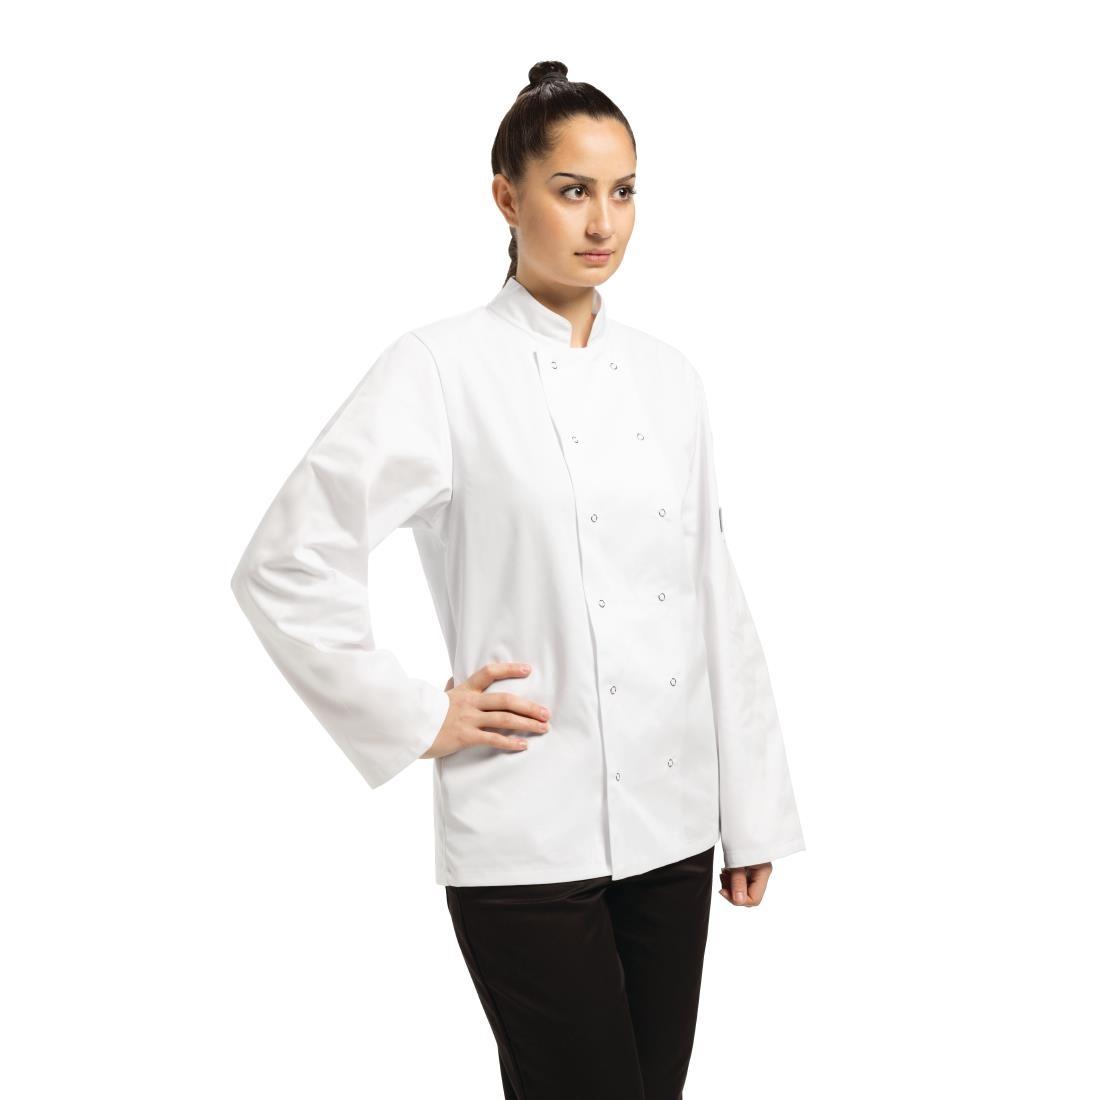 Whites Vegas Unisex Chefs Jacket Long Sleeve White 4XL - A134-4XL  - 2